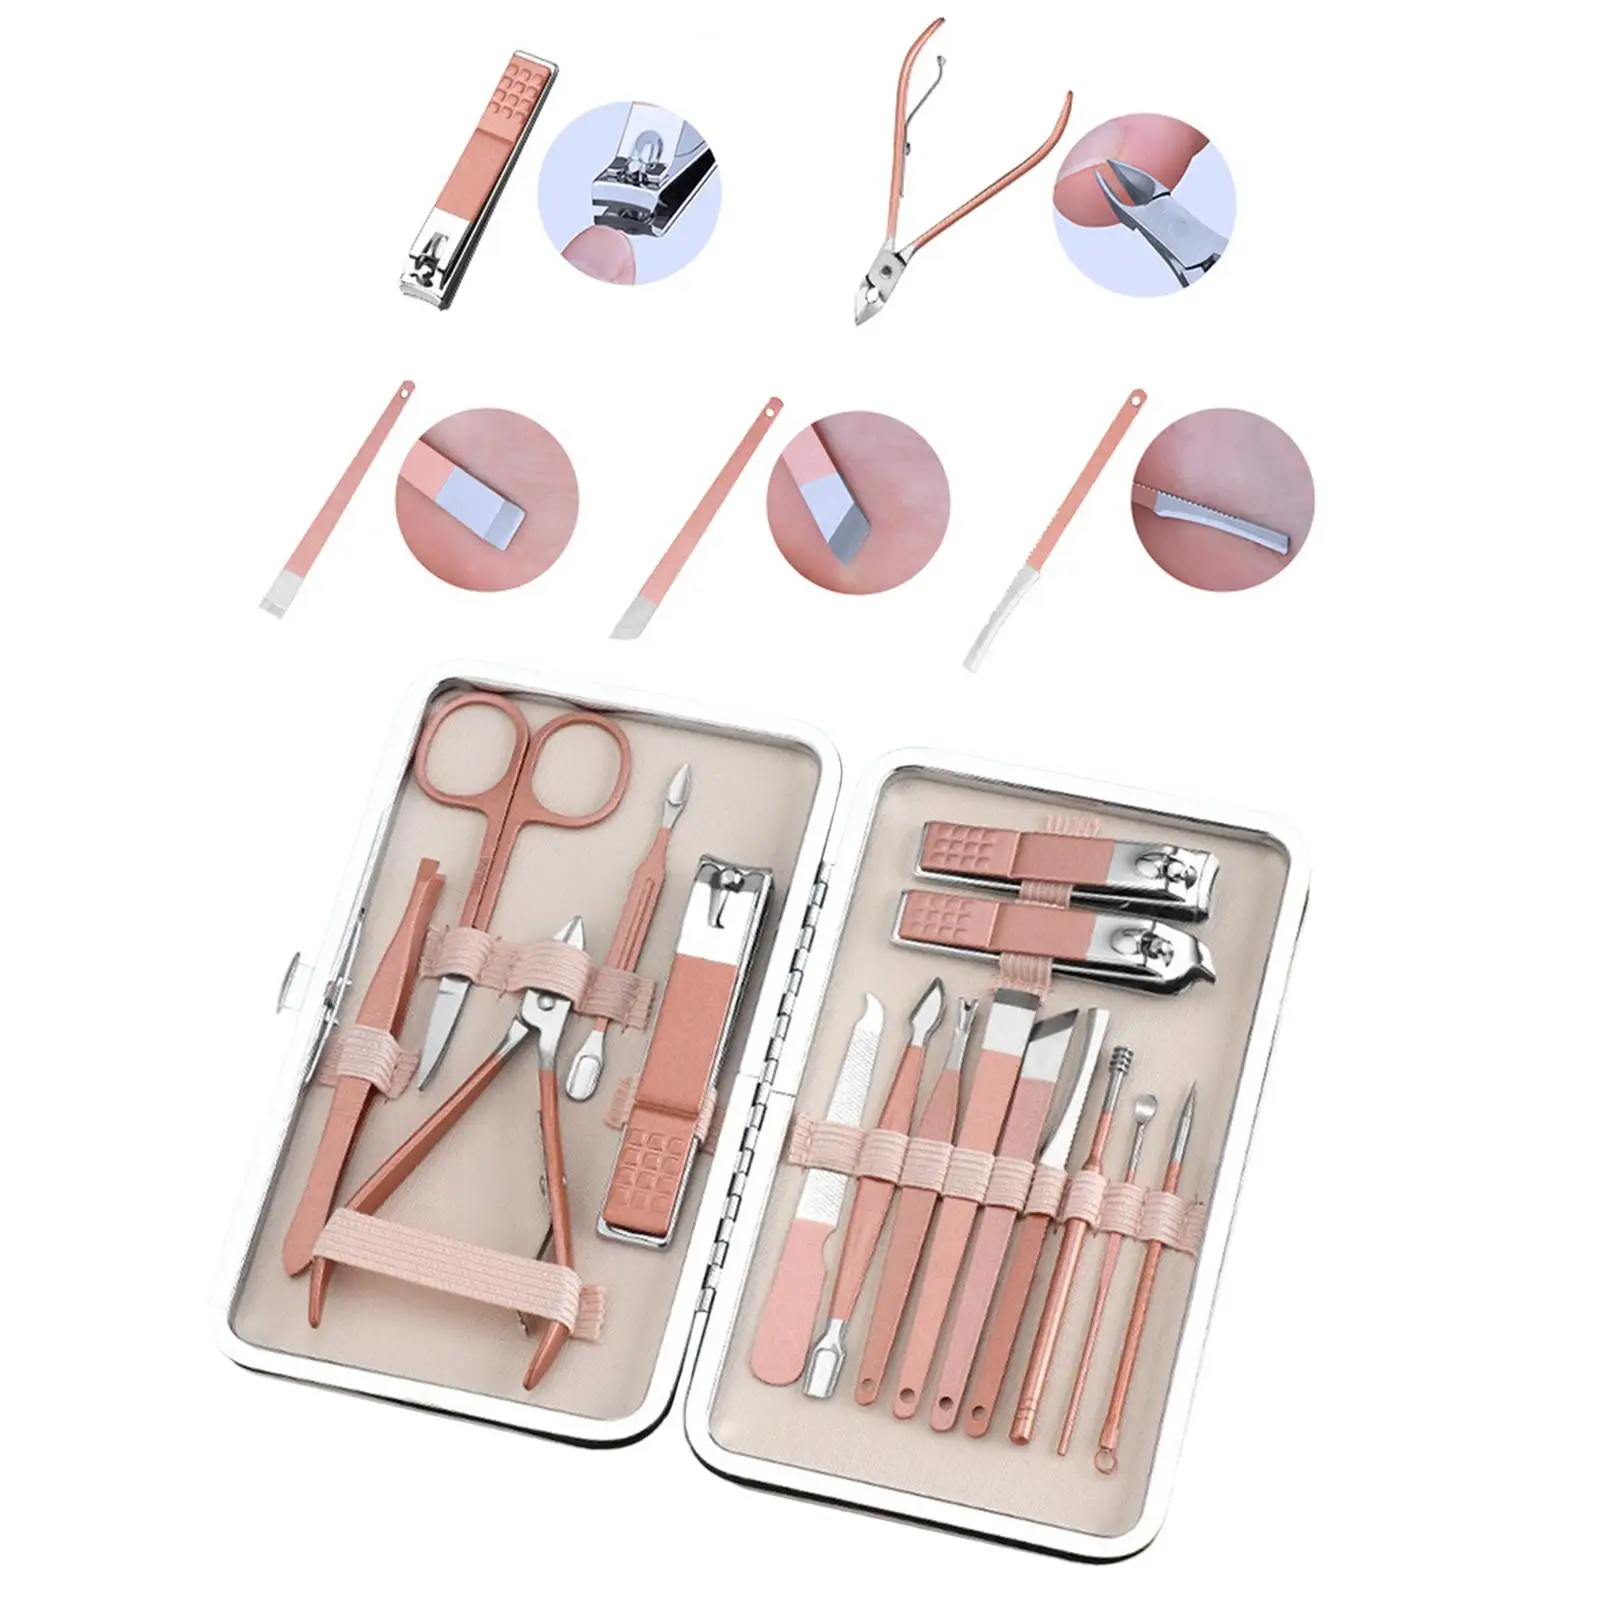 Grooming Kits Fingernails Toenails Care with Case for Beauty Salon Women Men